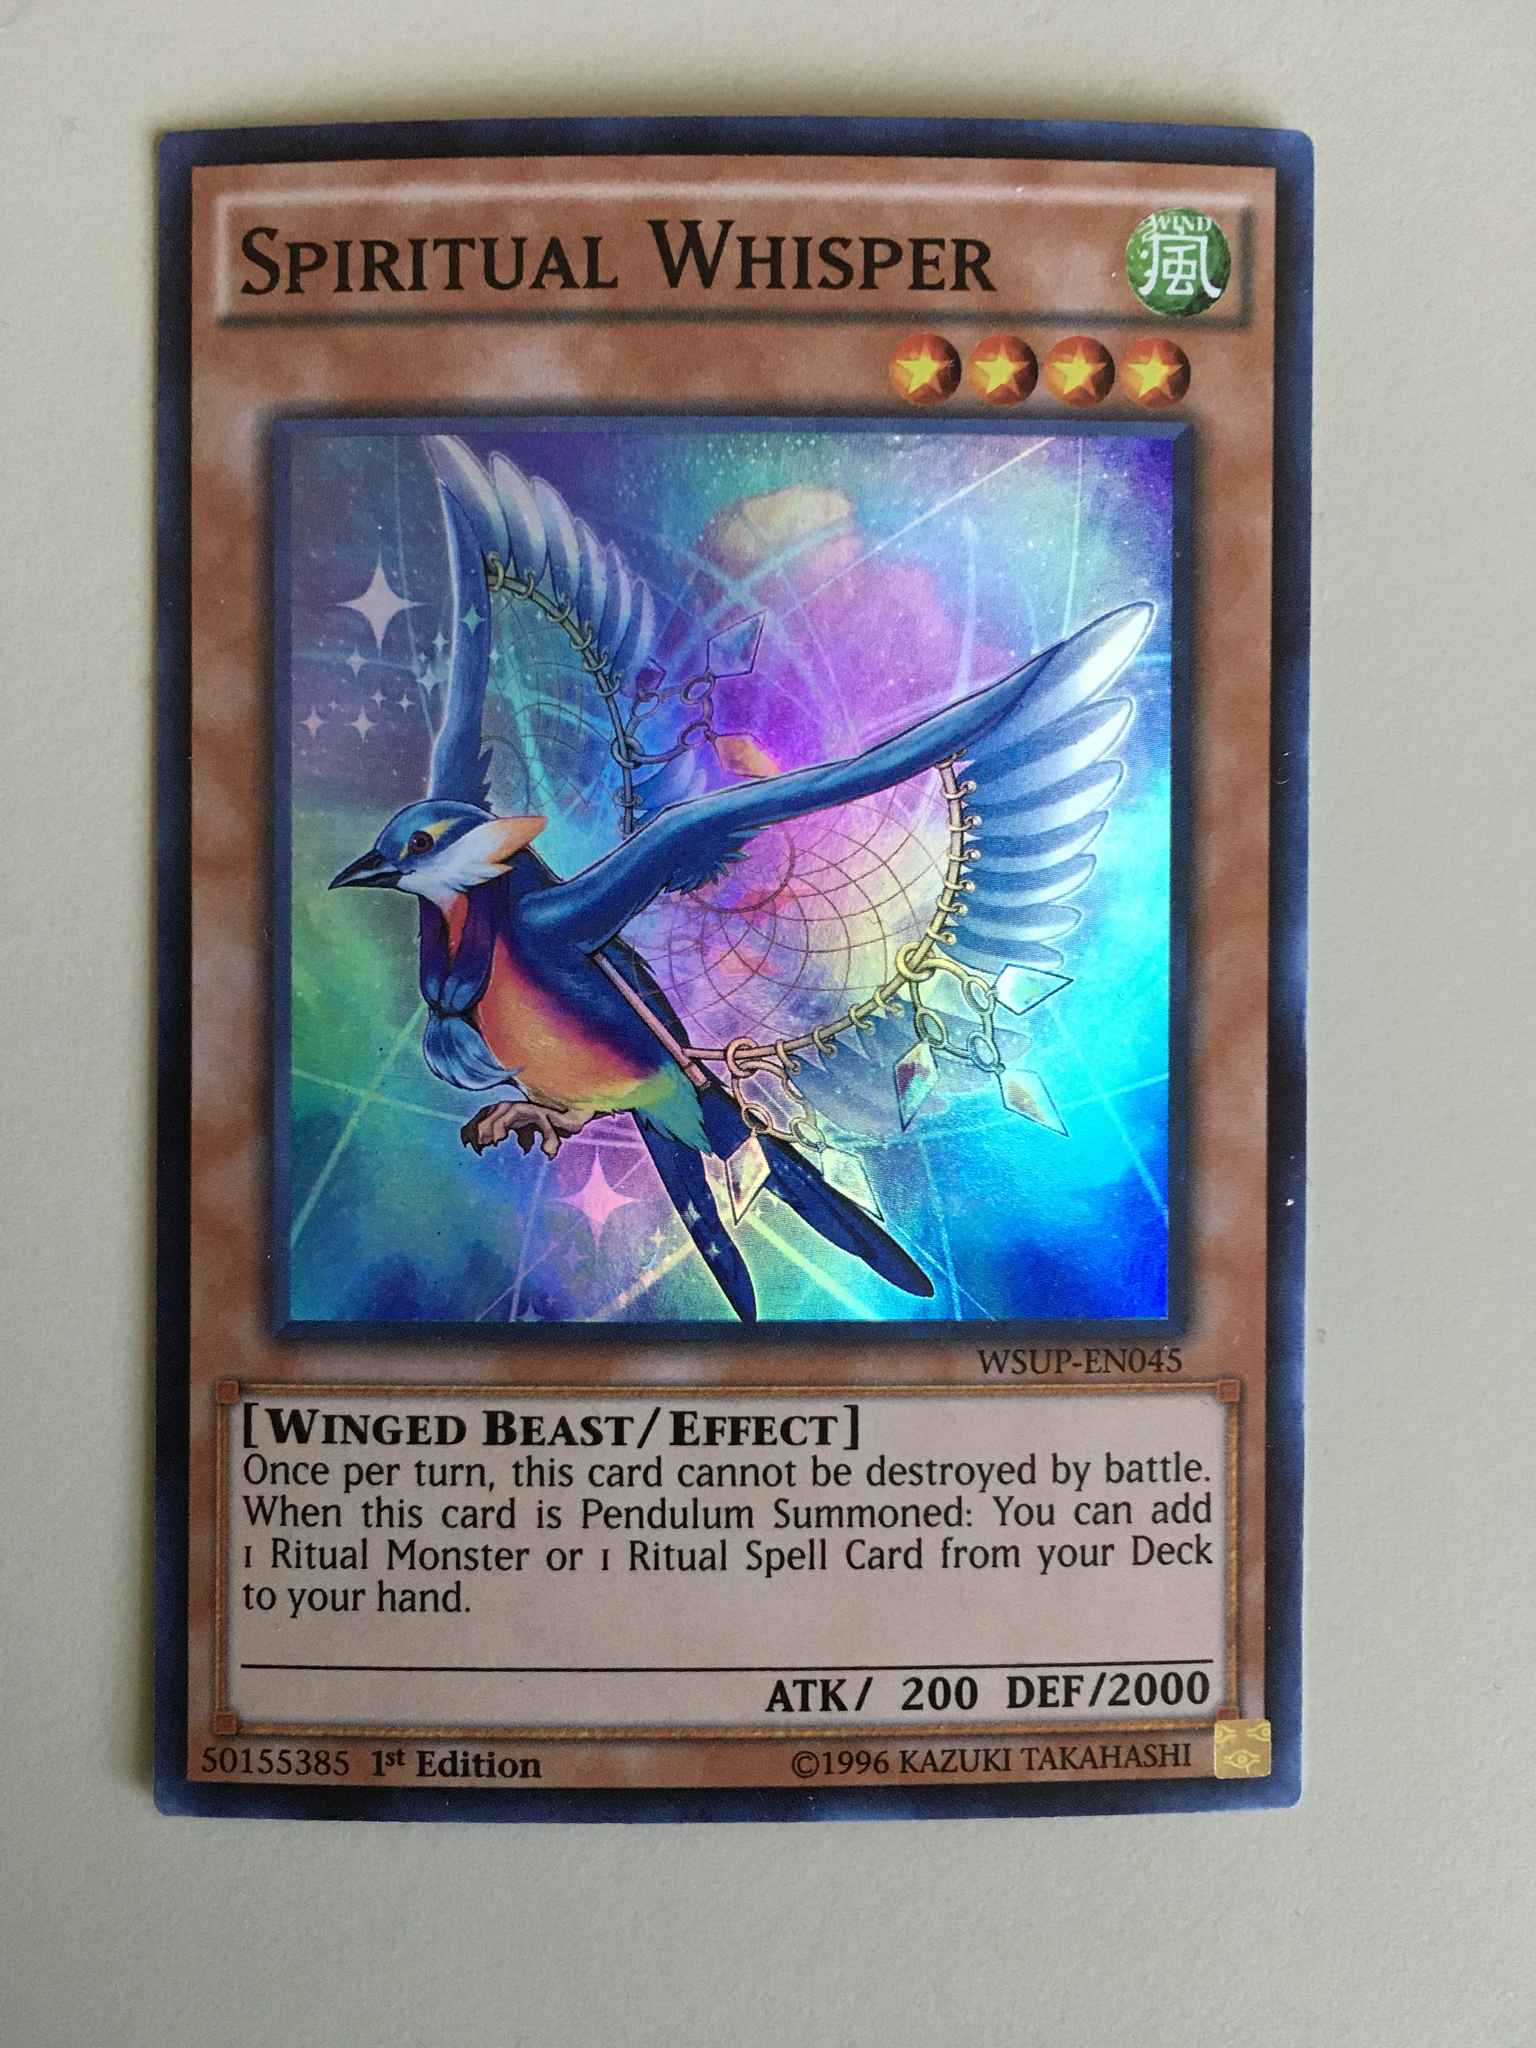 WSUP-EN045 3 x Yu-Gi-Oh Card - NM/Mint SPIRITUAL WHISPER super rare holo 